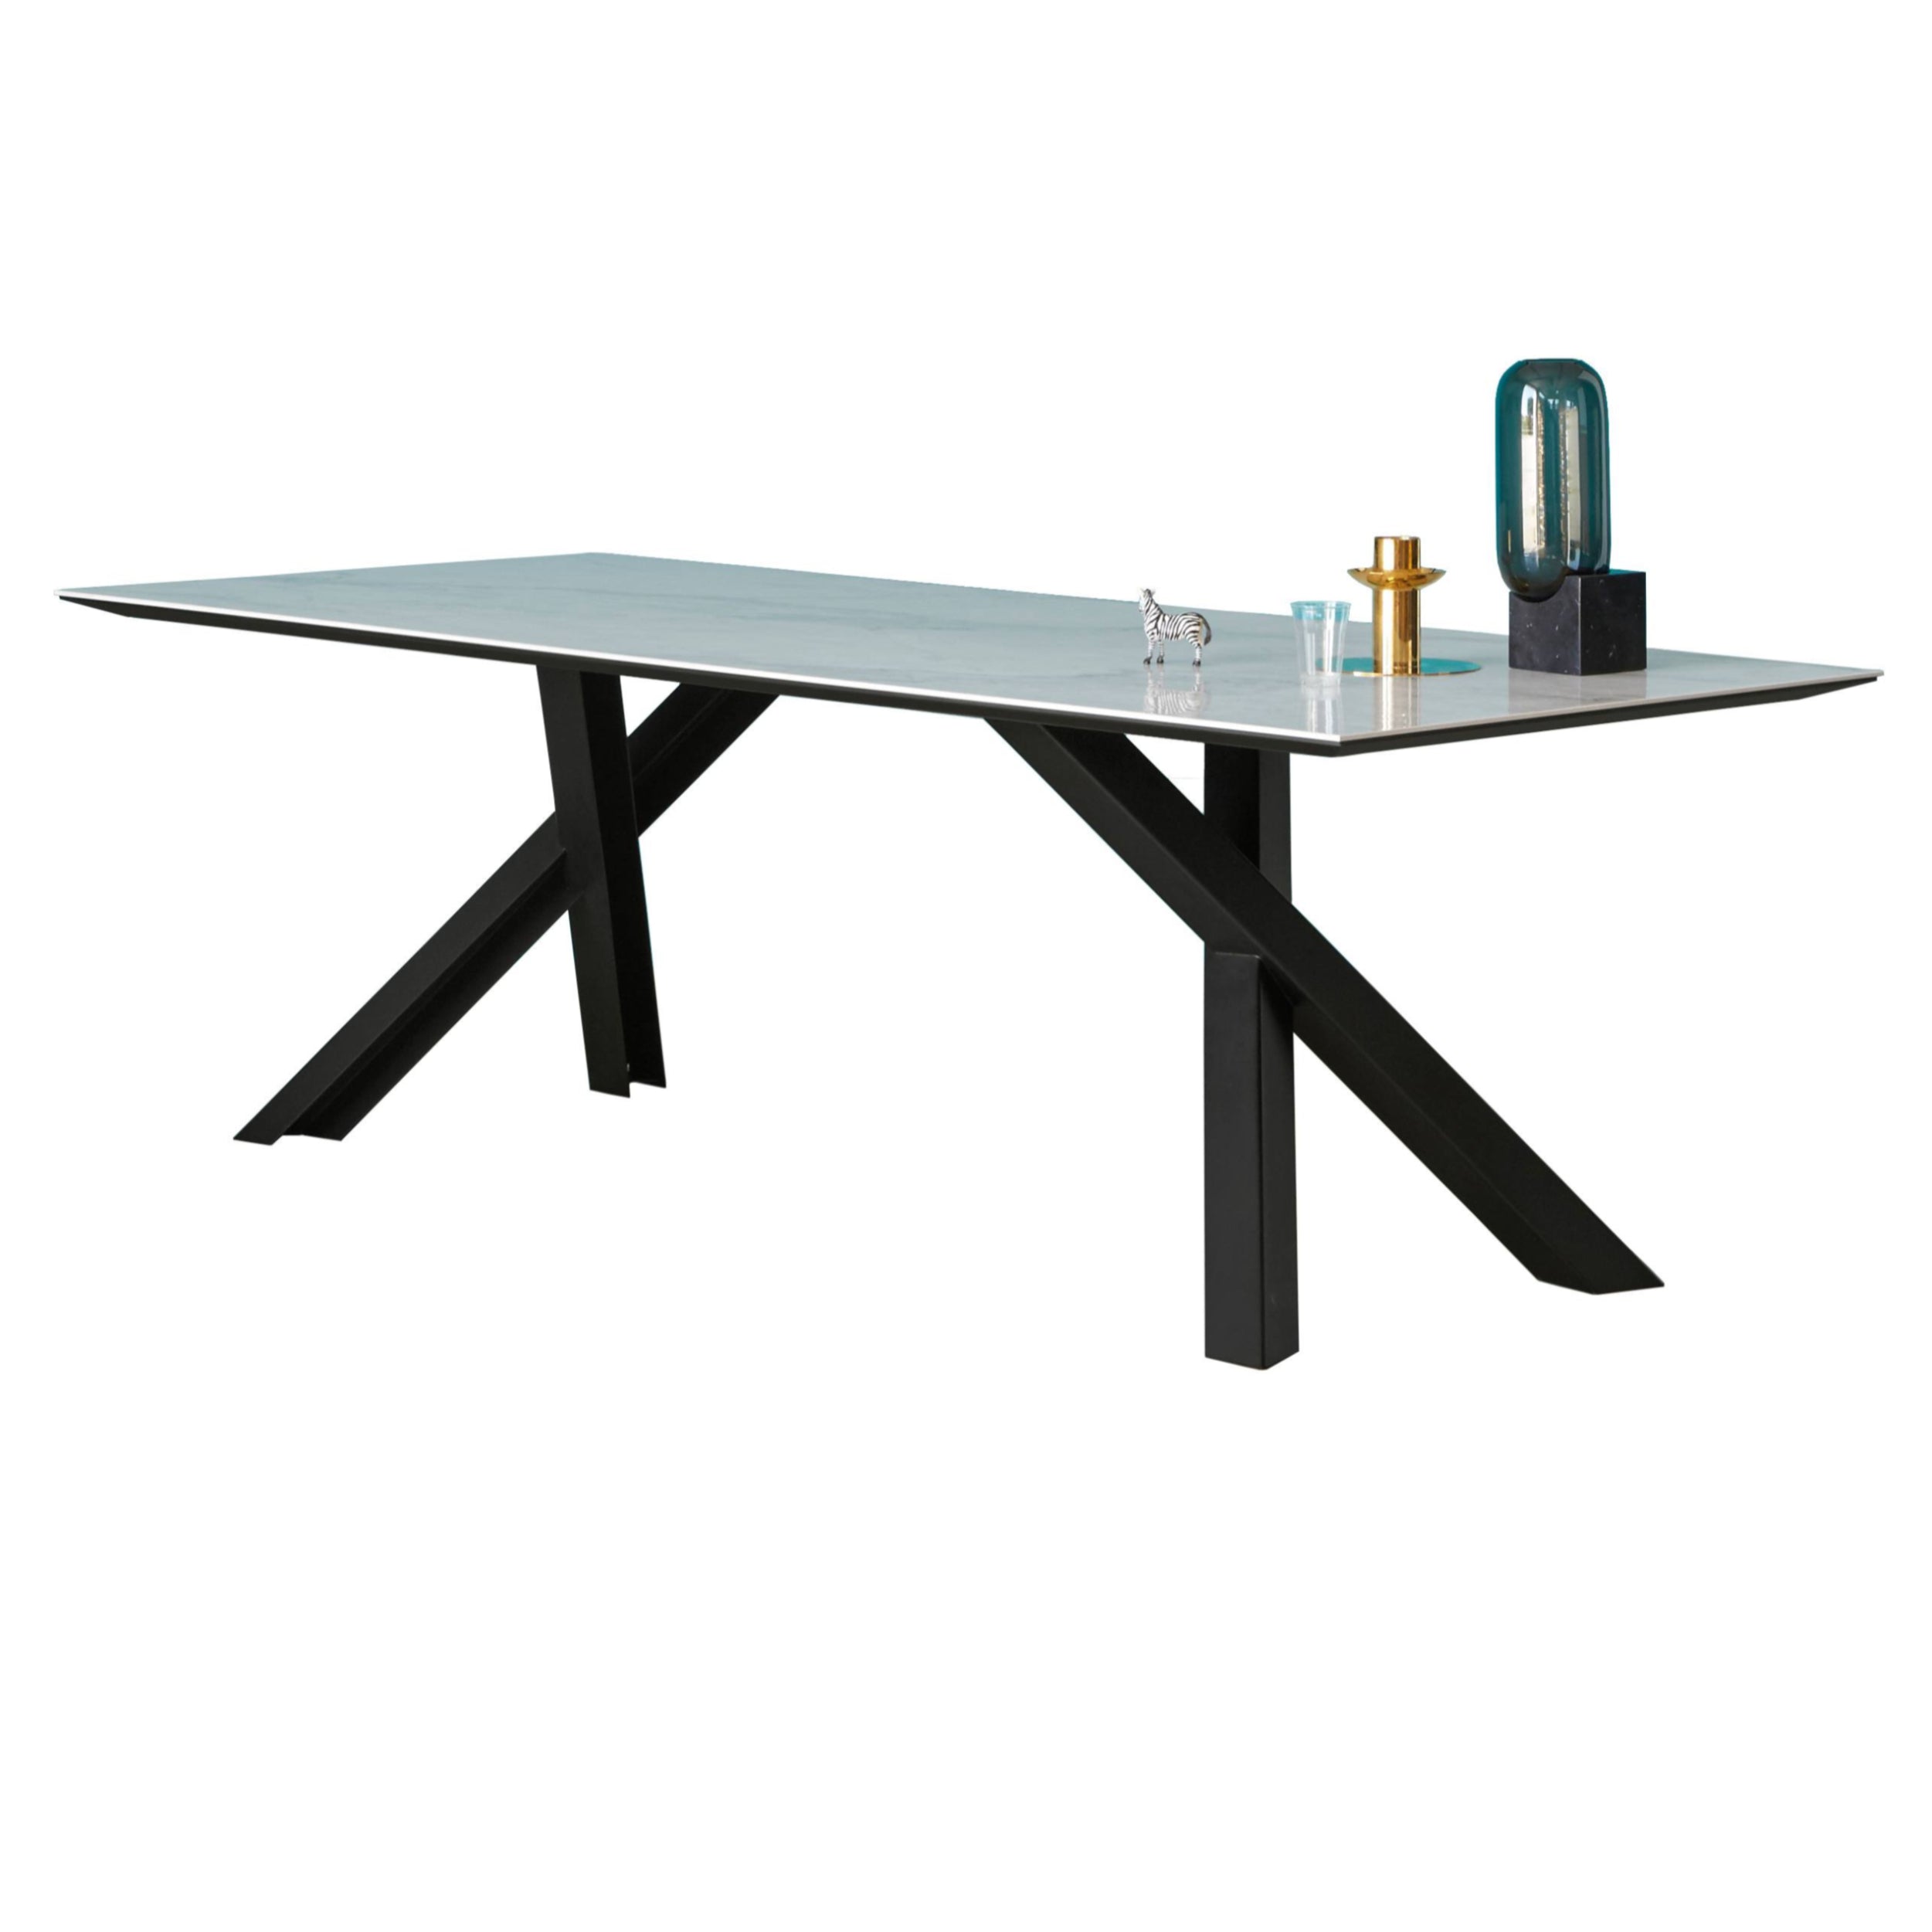 Gustave Dining Table: Large + Statuario White Ceramic + Lacquered Black